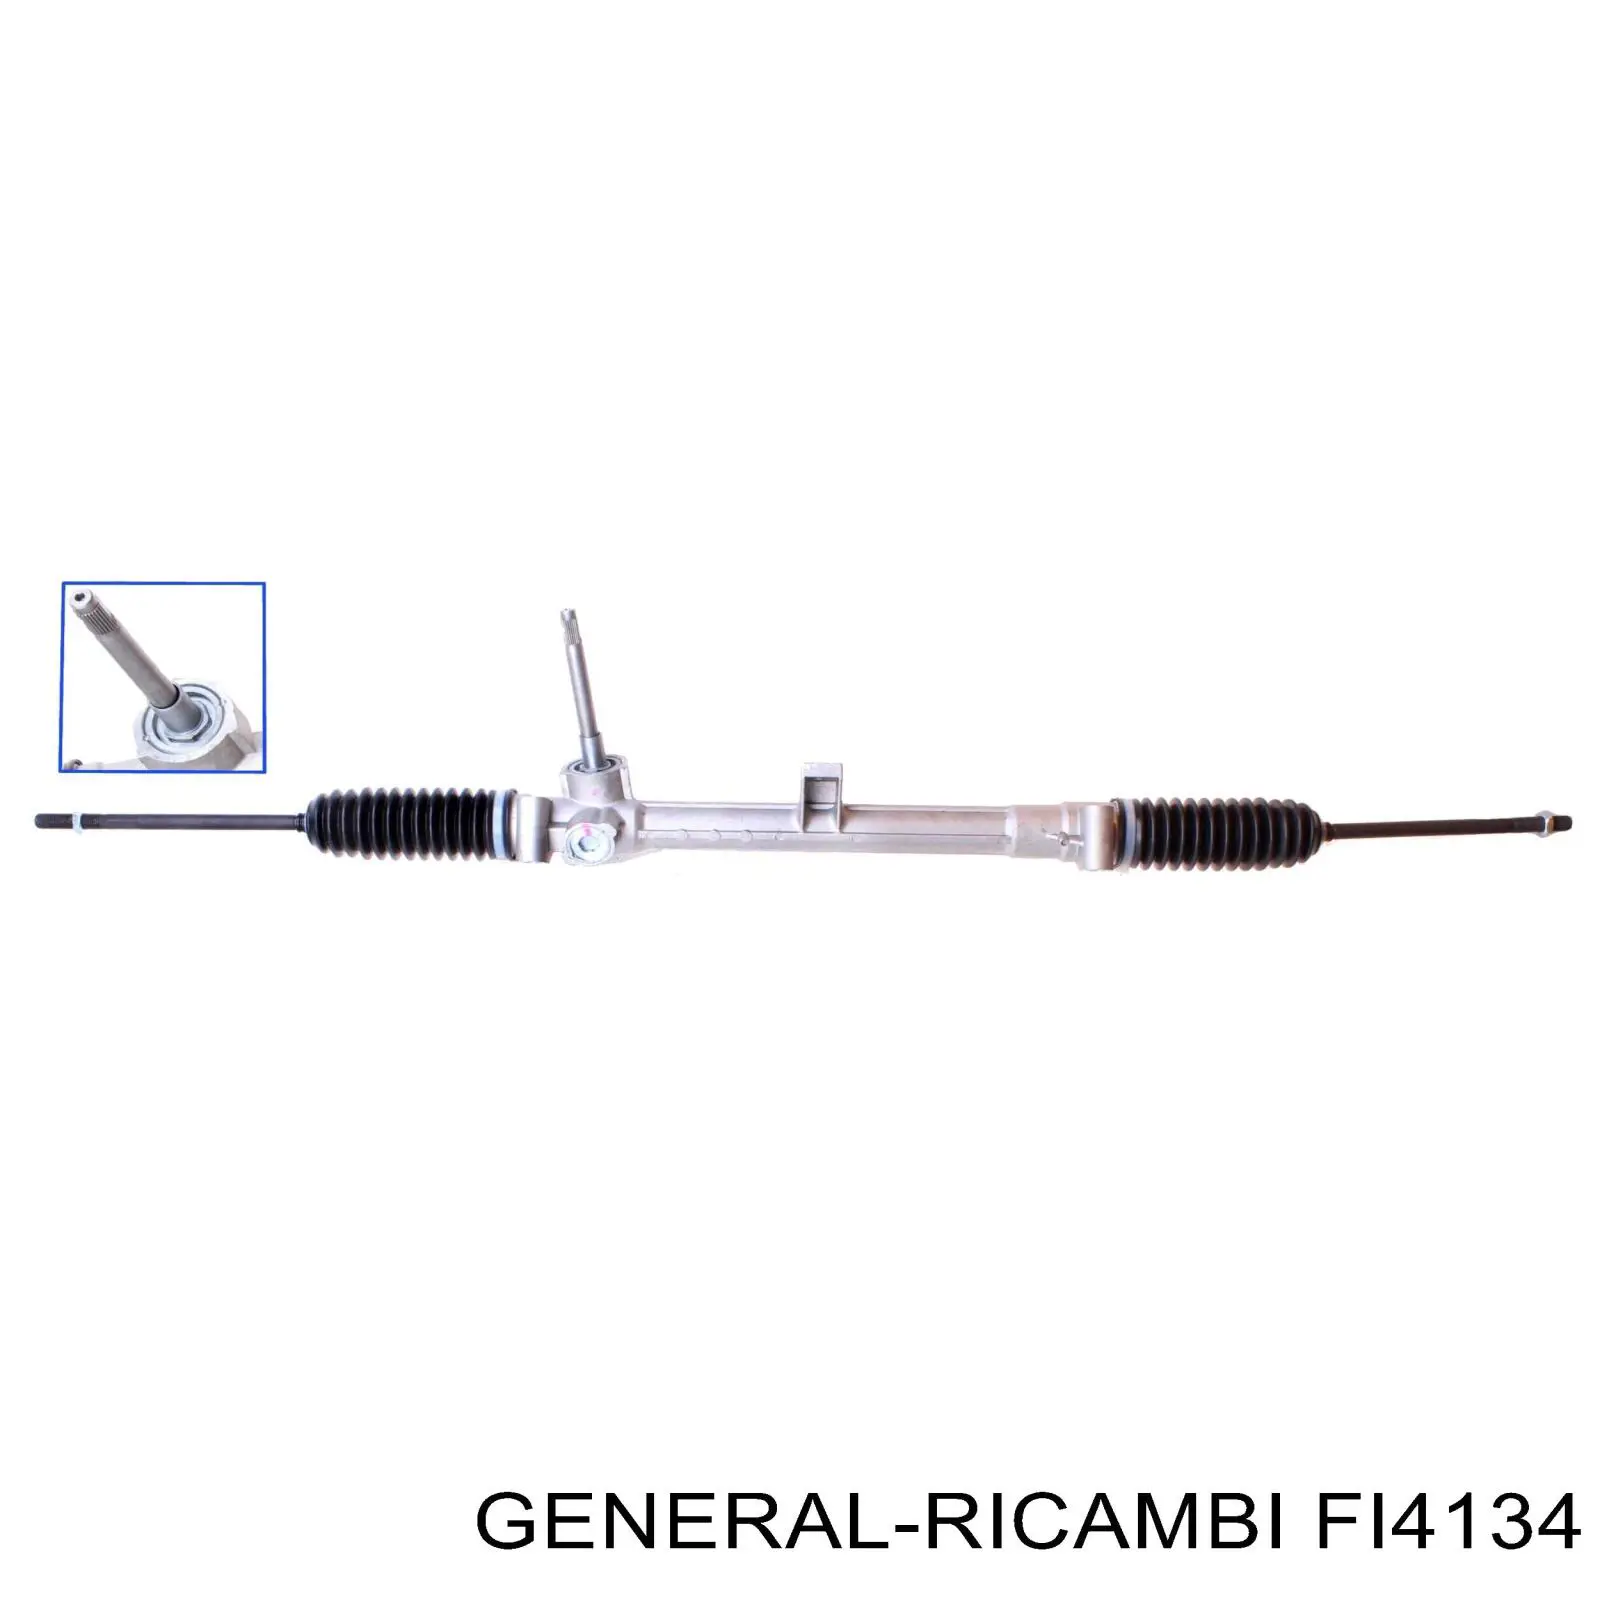 FI4134 General Ricambi рулевая рейка